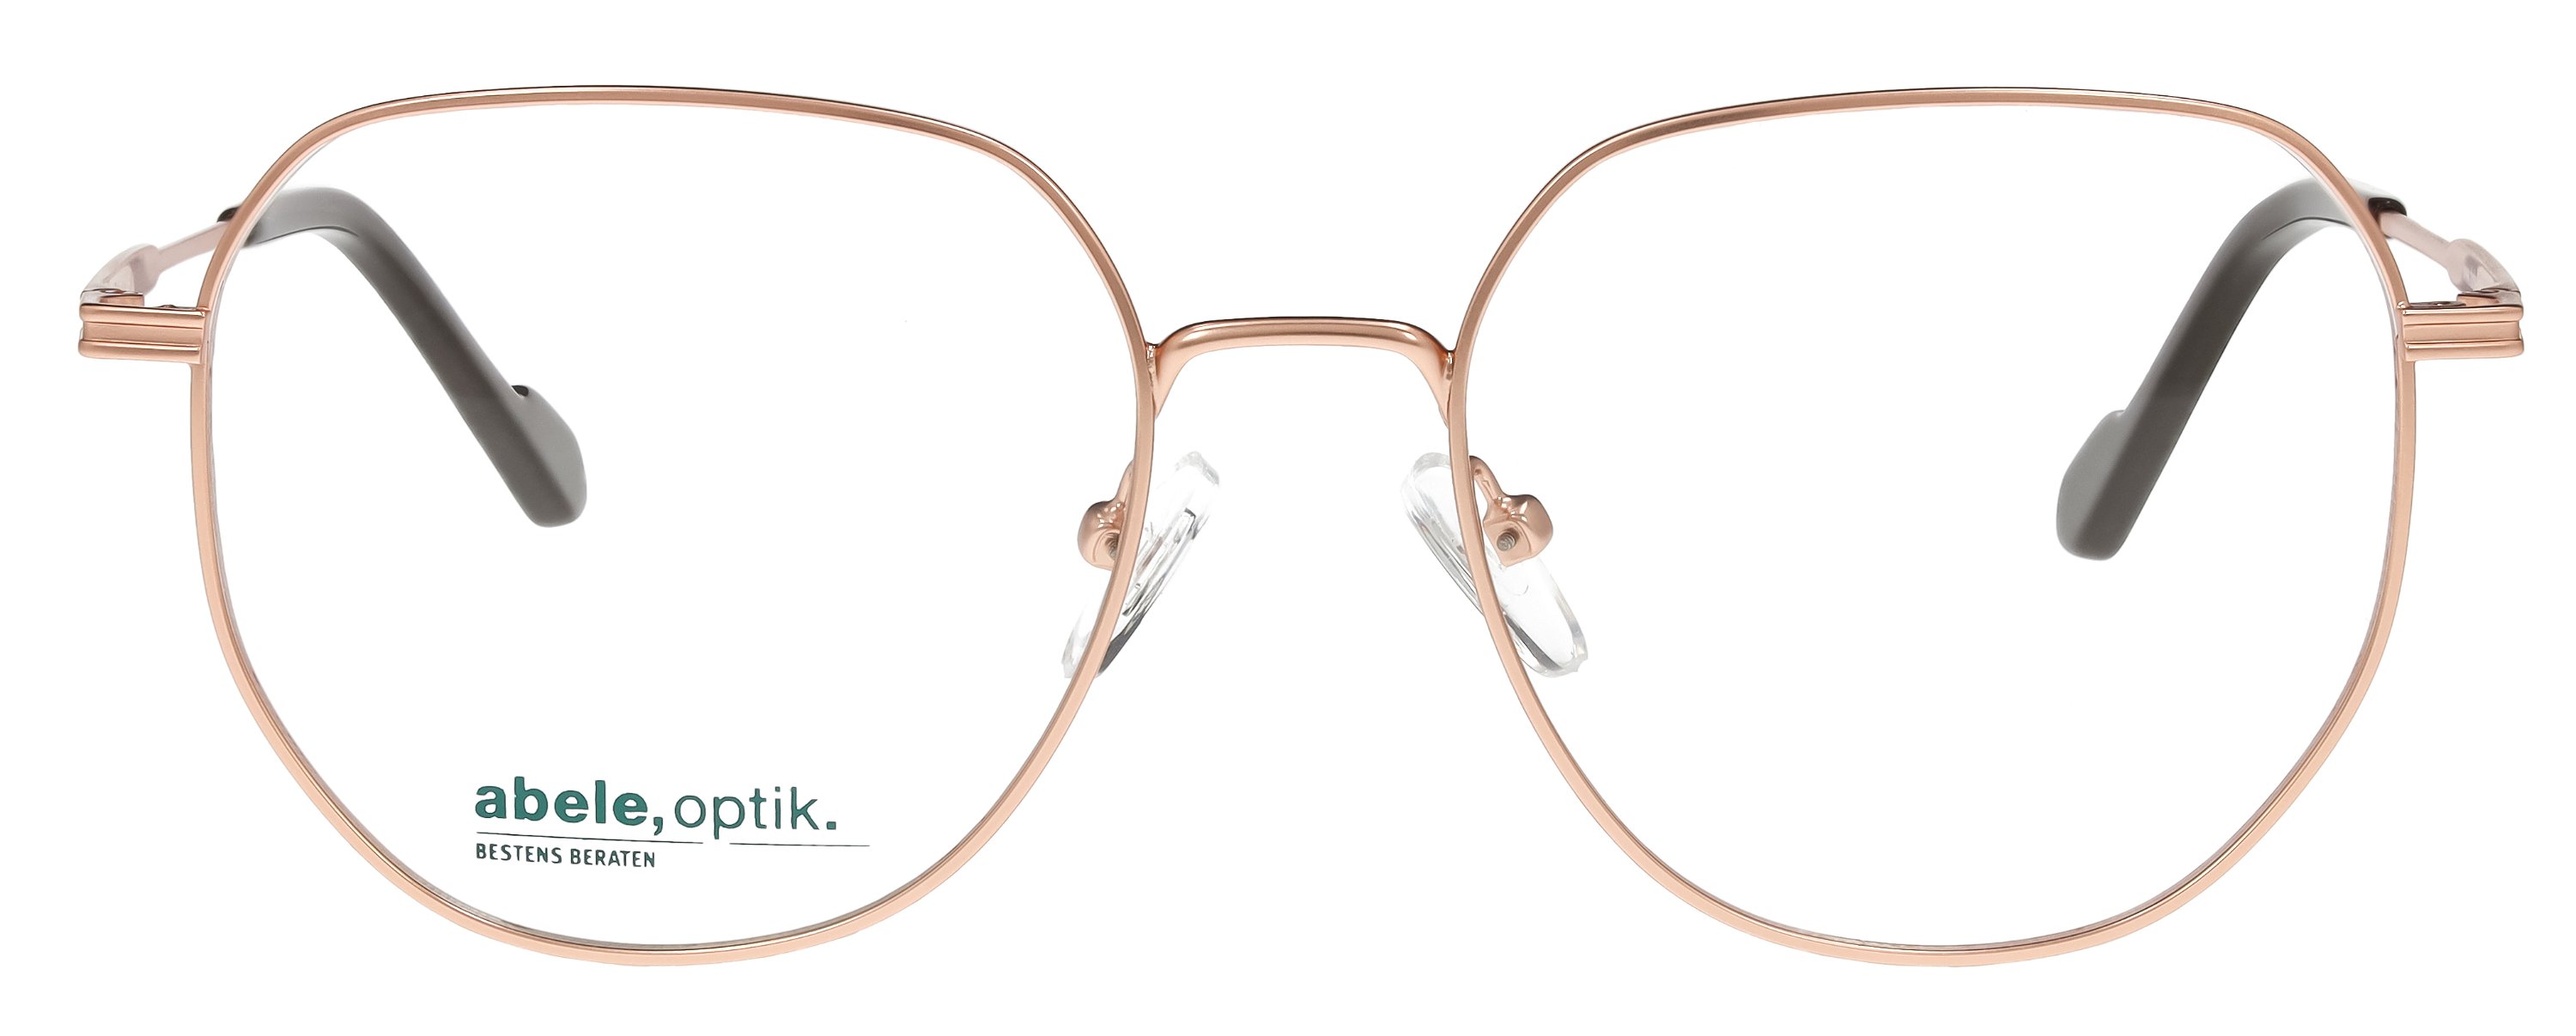 abele optik Brille für Damen in roségold 147591